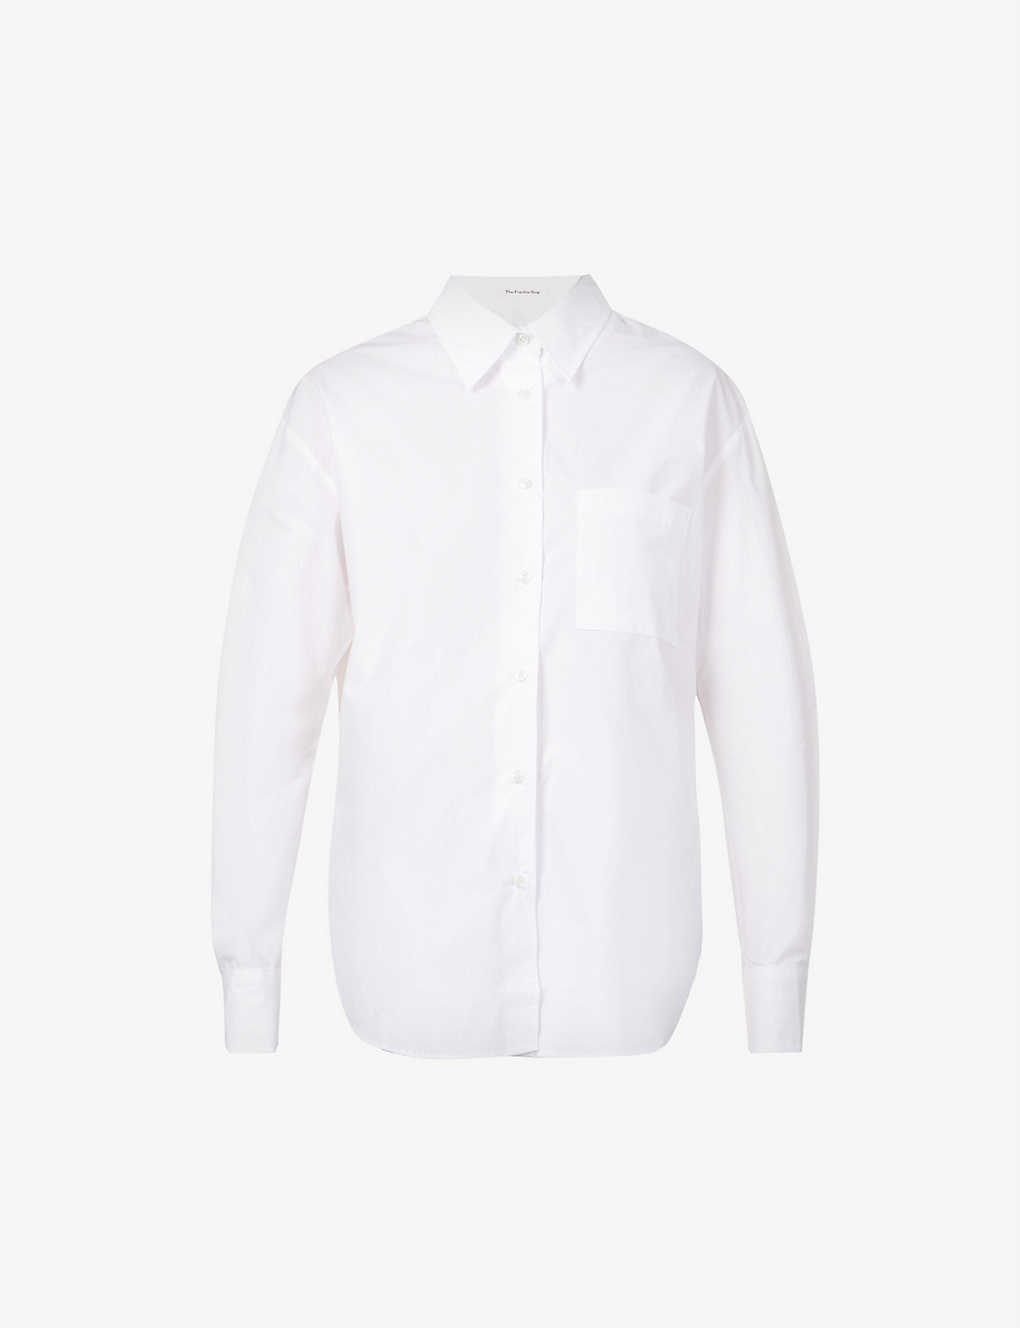 Shop The Frankie Shop Frankie Shop Womens White Lui Relaxed-fit Cotton-poplin Shirt